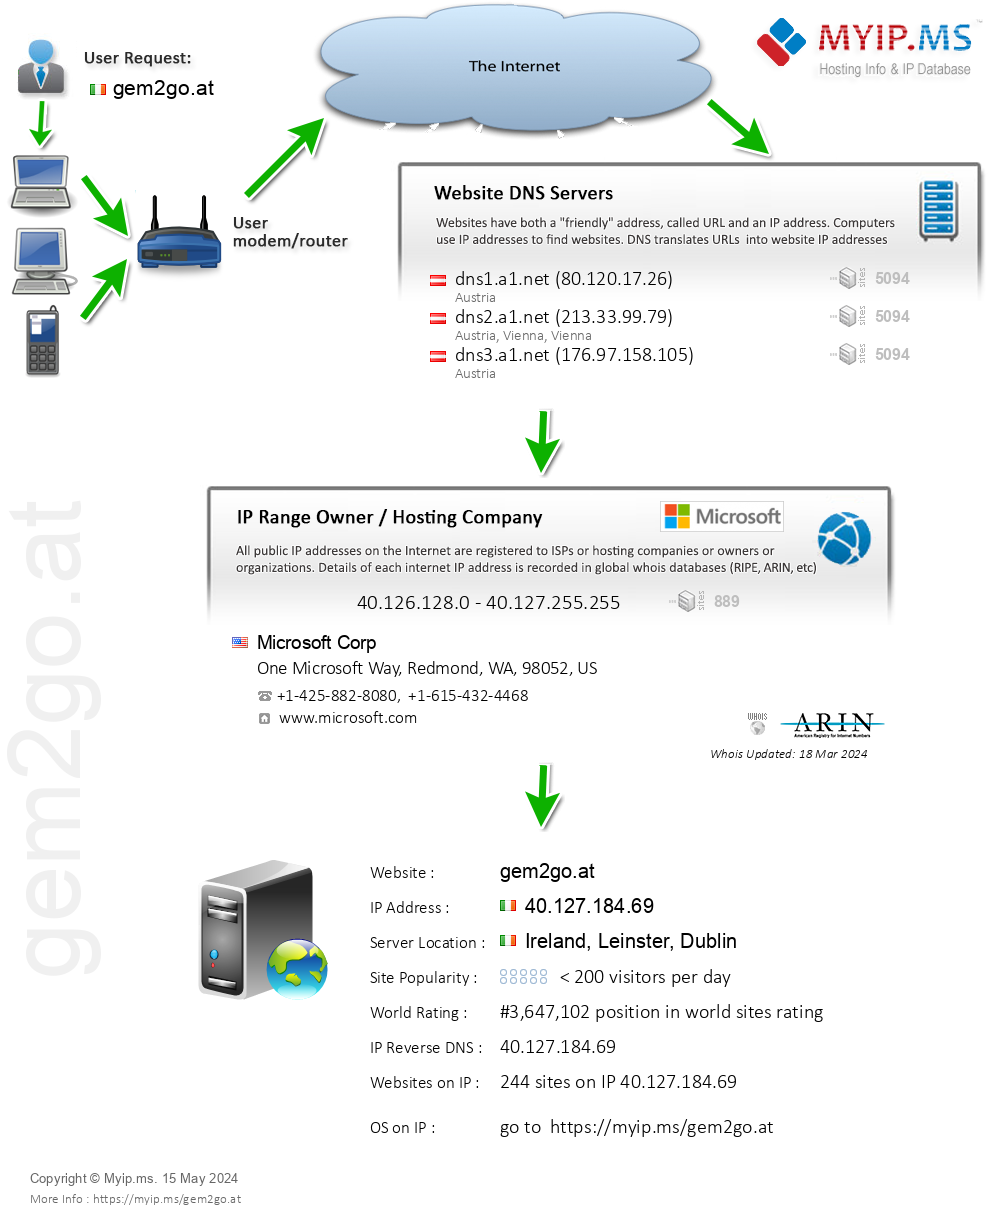 Gem2go.at - Website Hosting Visual IP Diagram